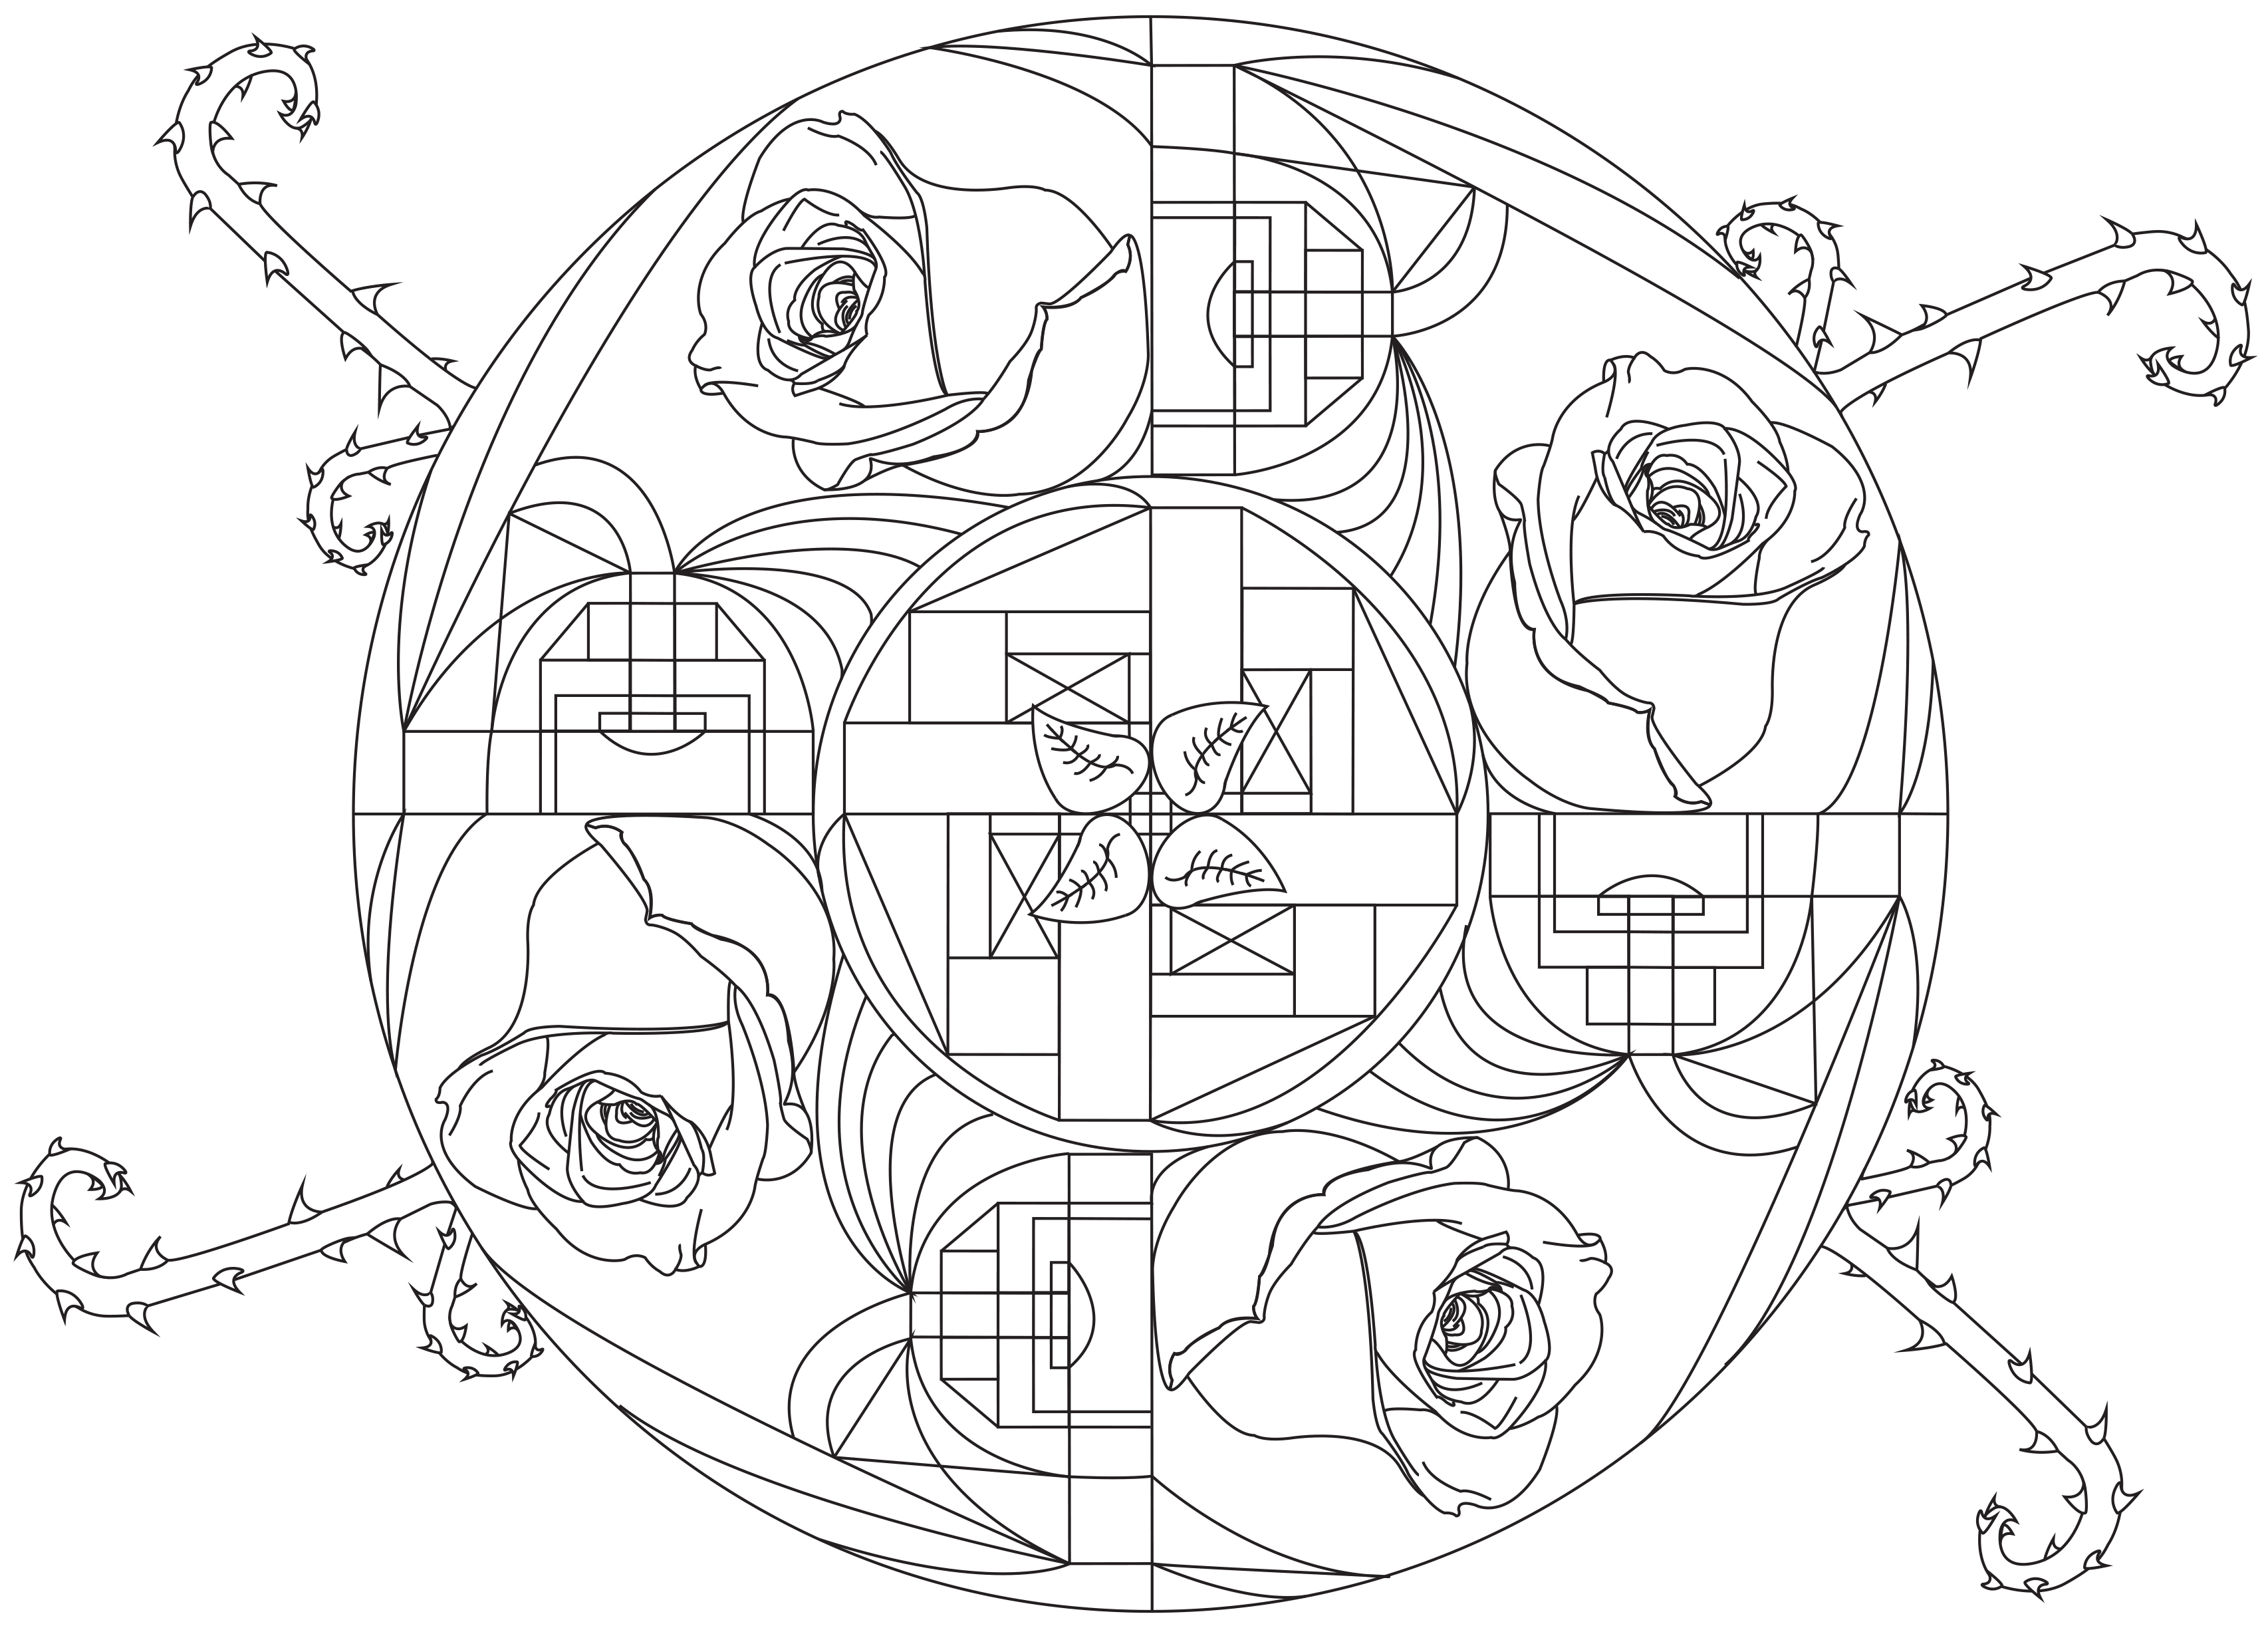 A Mandala and its amazing roses, Artist : Allan